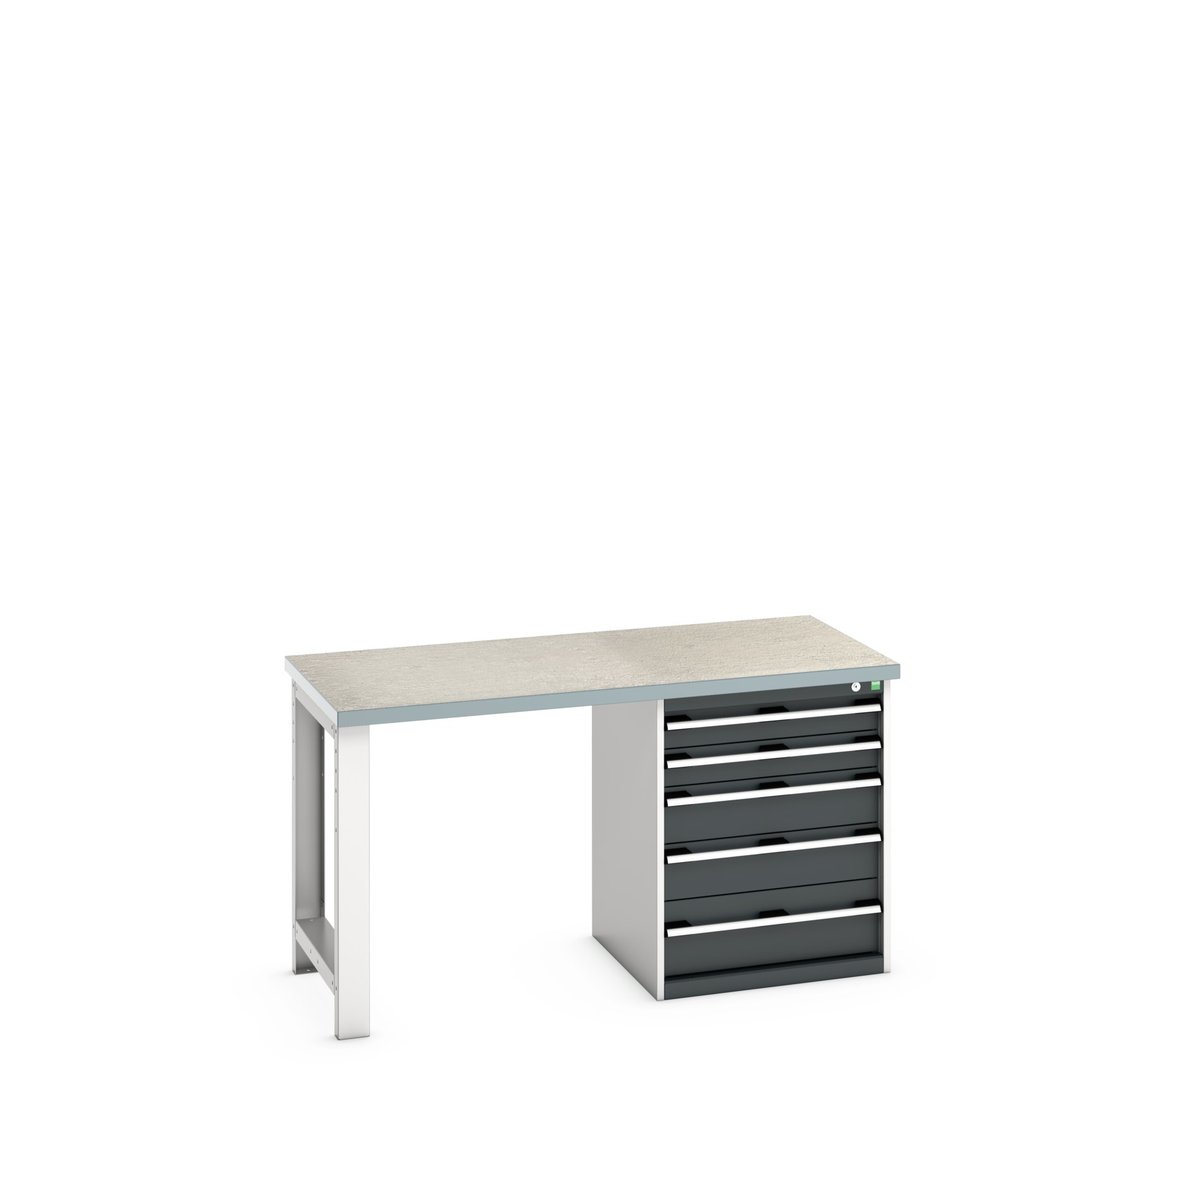 41003135. - cubio pedestal bench (lino)